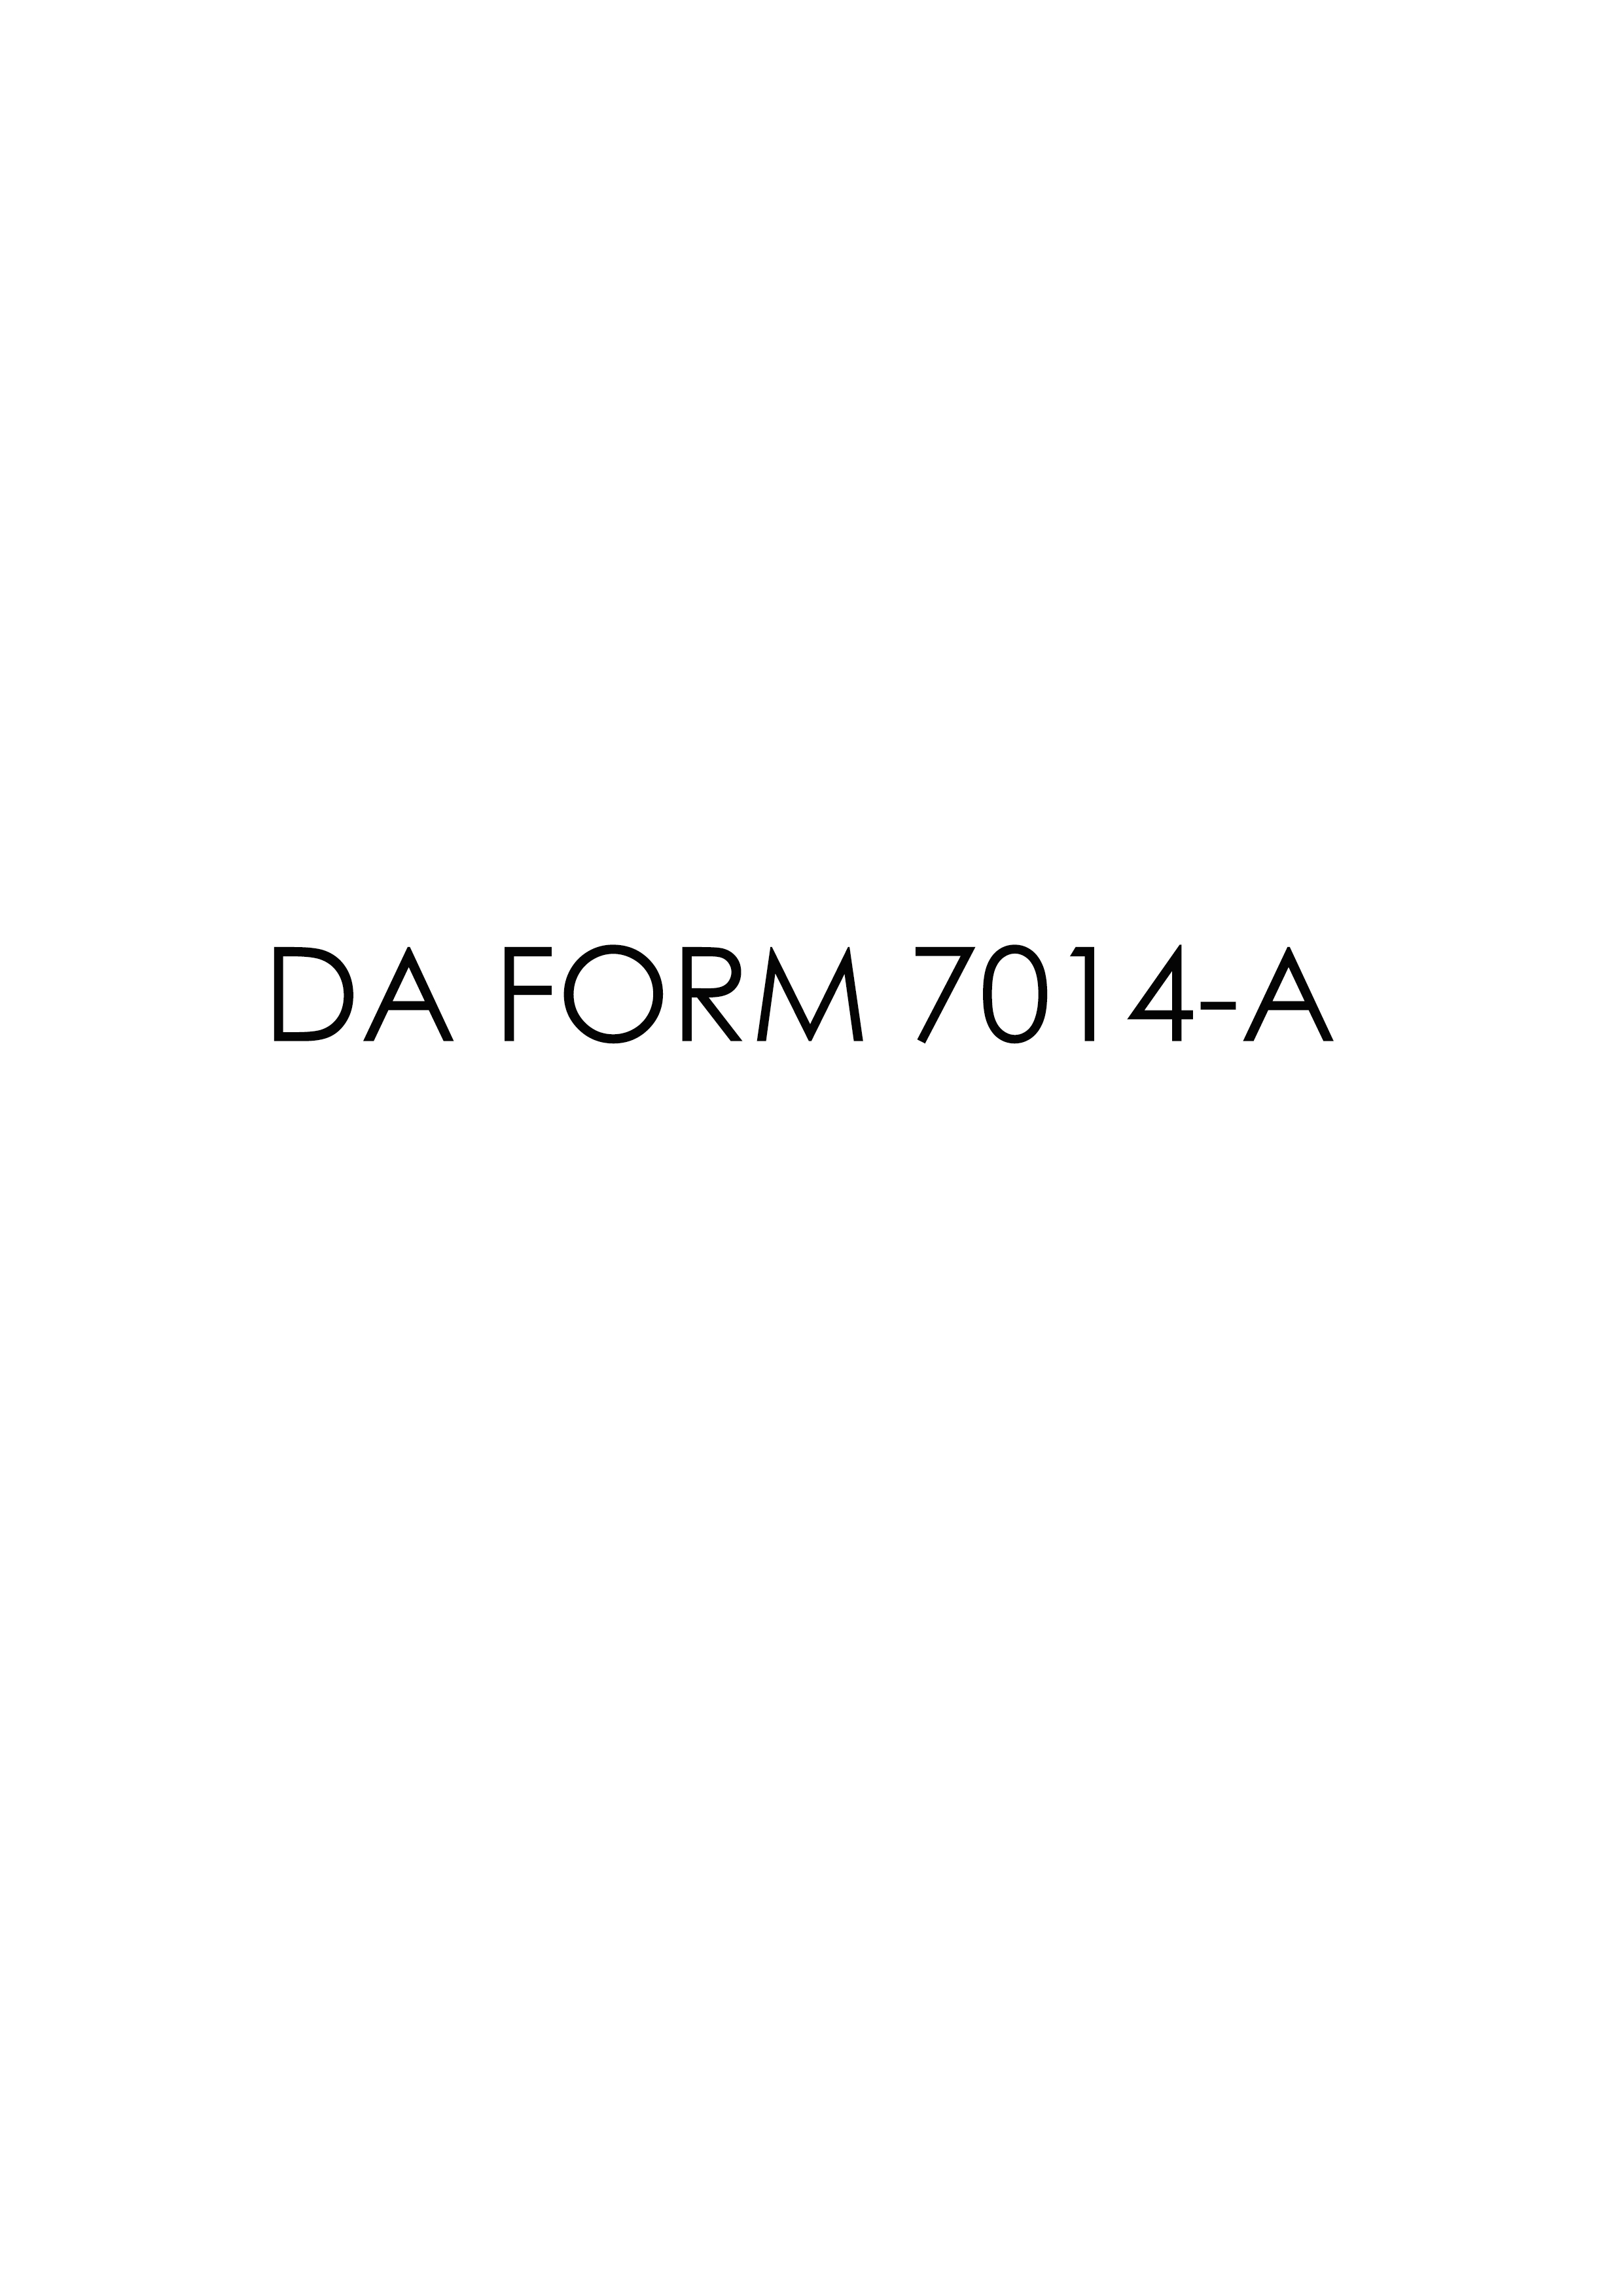 da Form 7014-A fillable